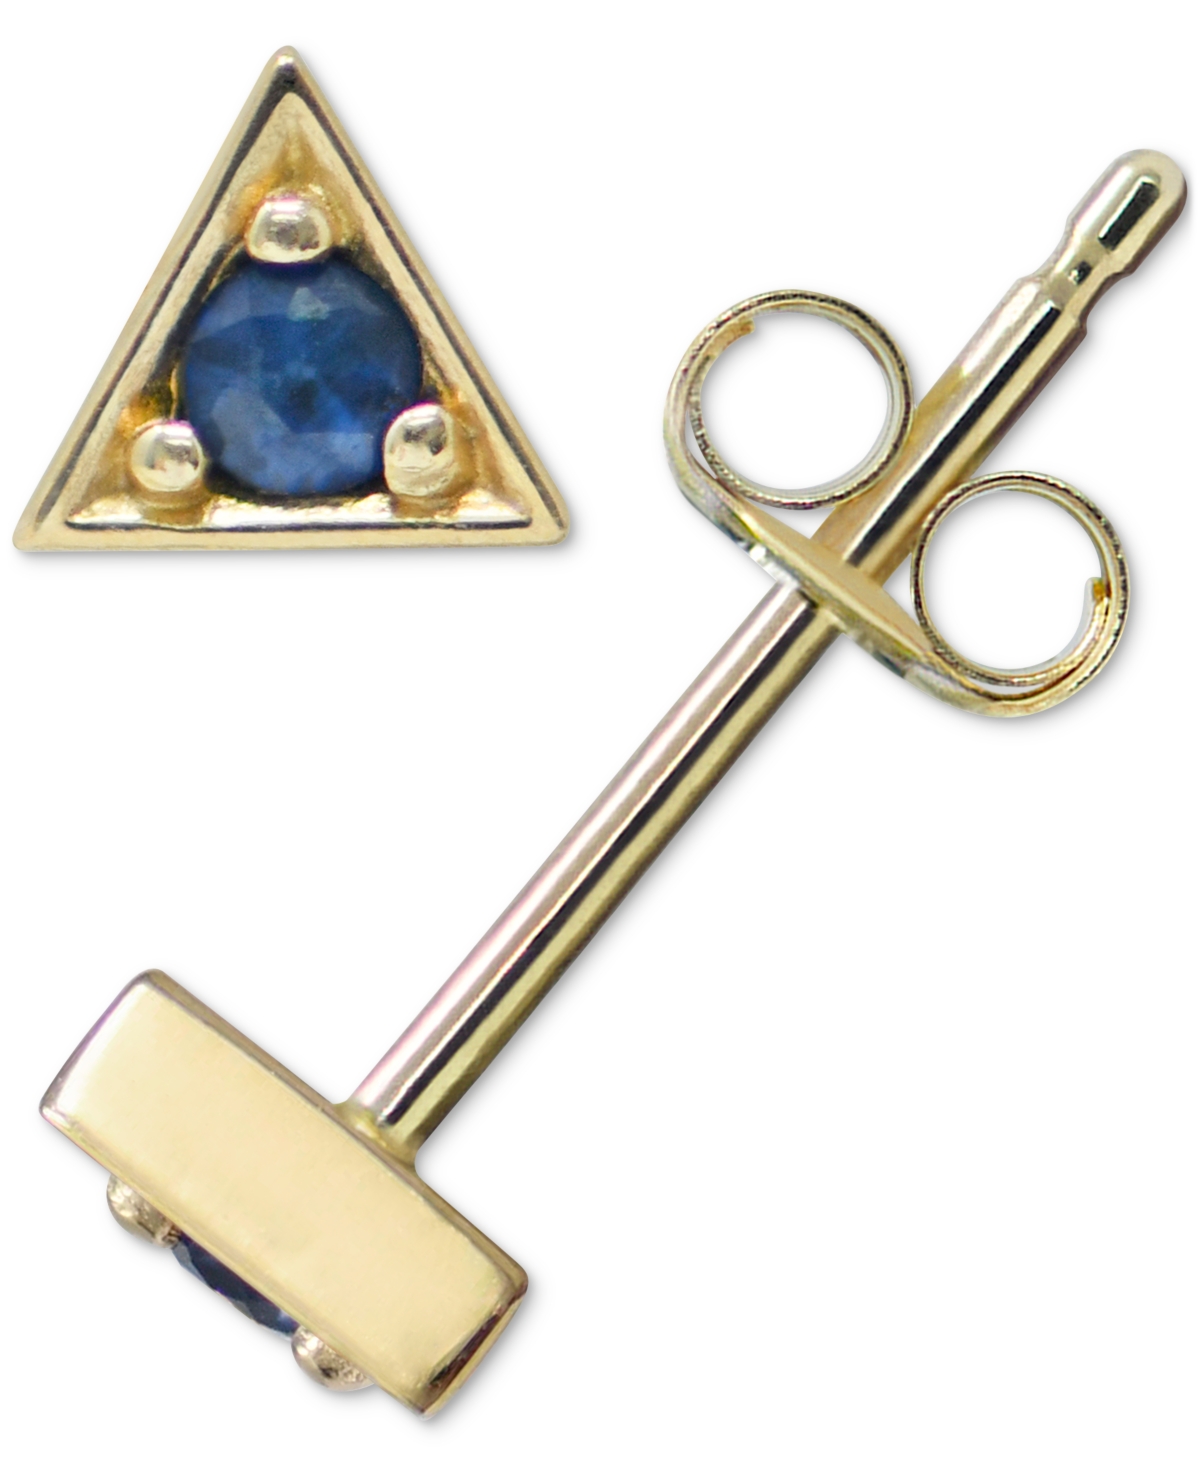 Anzie Emerald Triangle Stud Earrings in 14k Gold (Also in Turquoise, Australian Opal, & Sapphire)